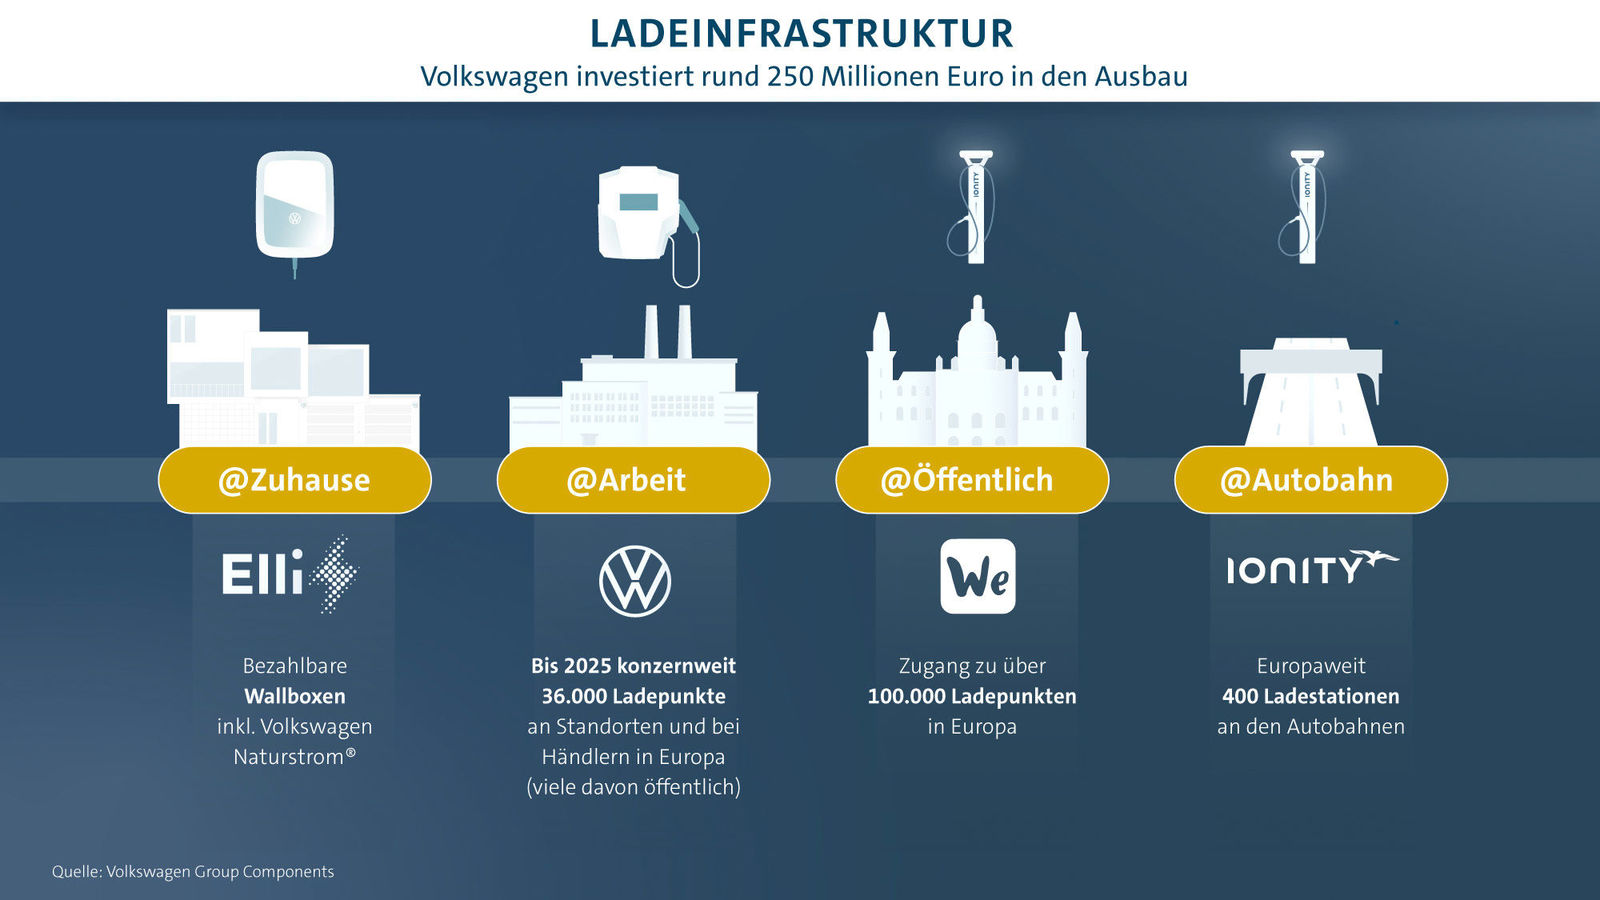 Story: "Volkswagen lässt die Laderoboter los"